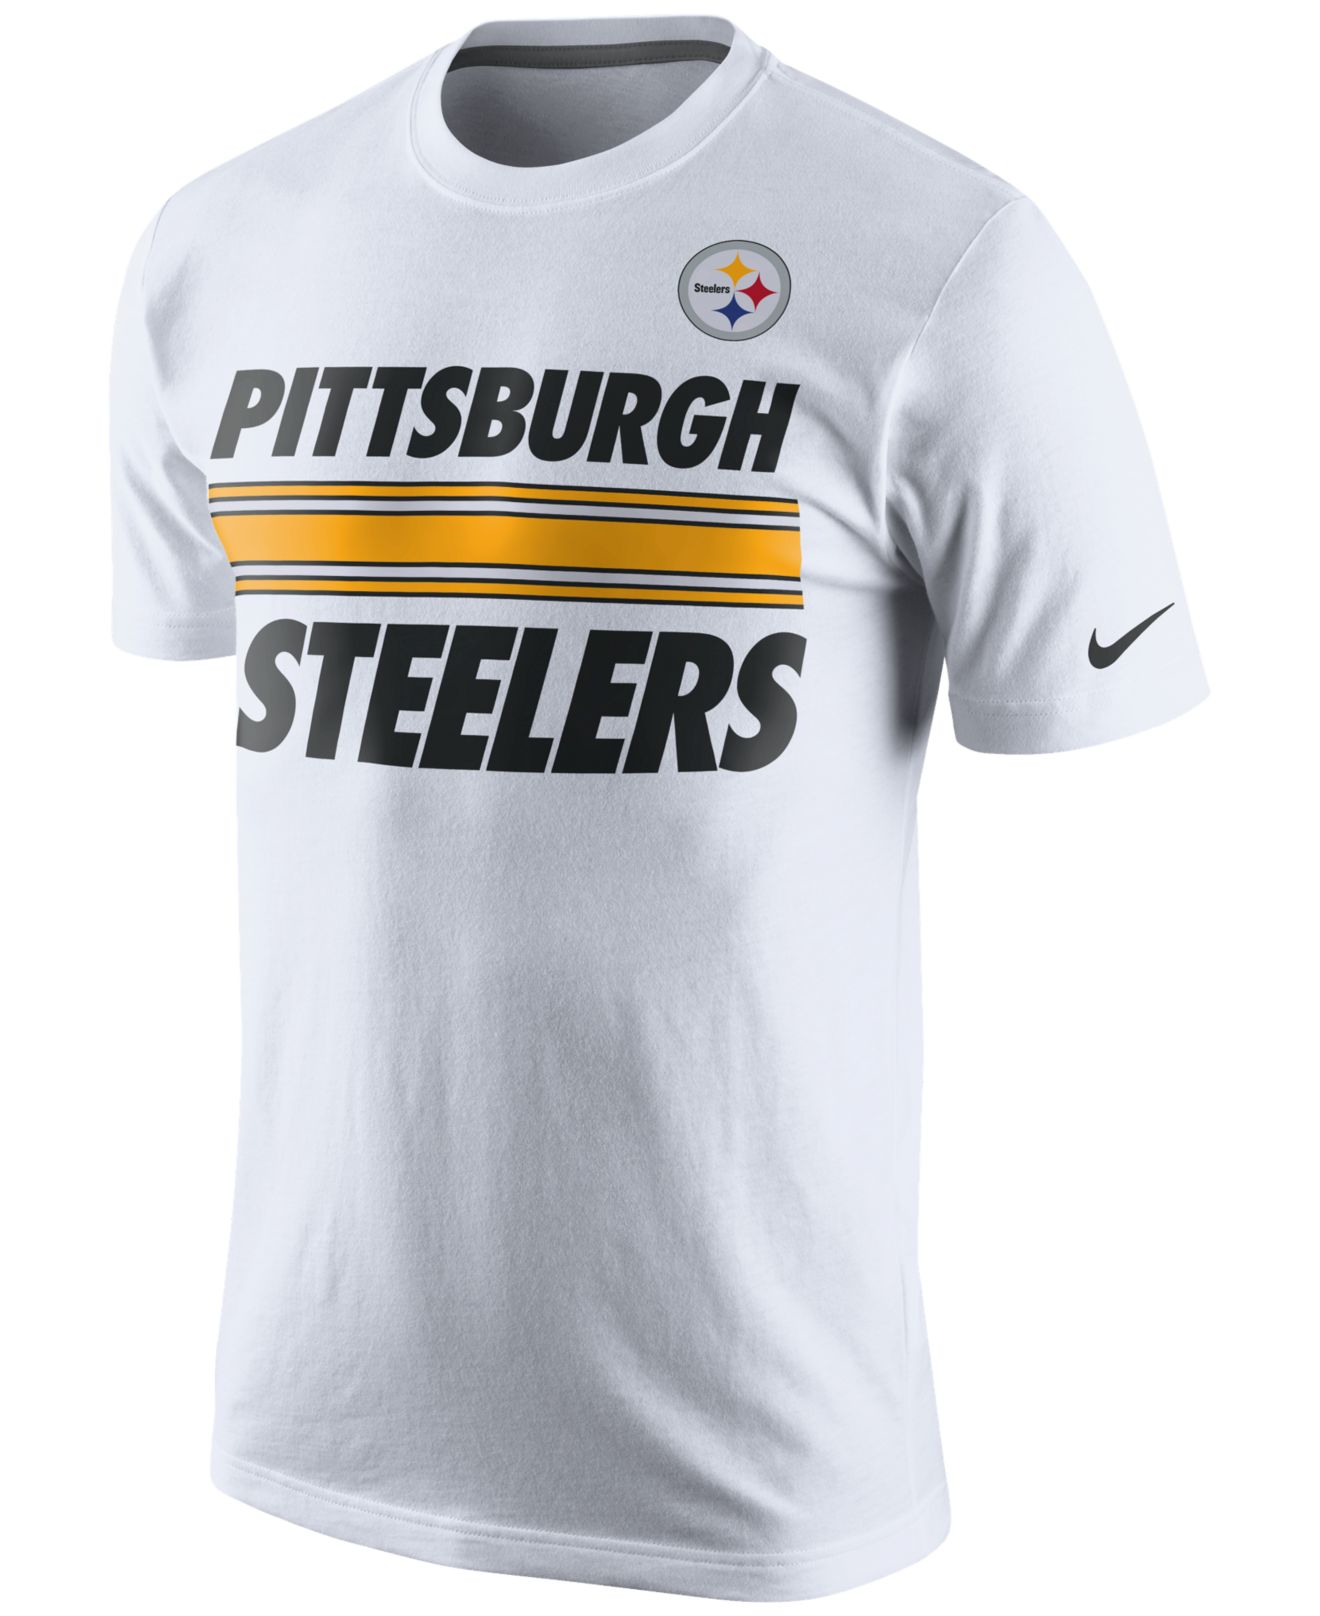 Lyst - Nike Men's Pittsburgh Steelers Team Stripe T-shirt in White for Men